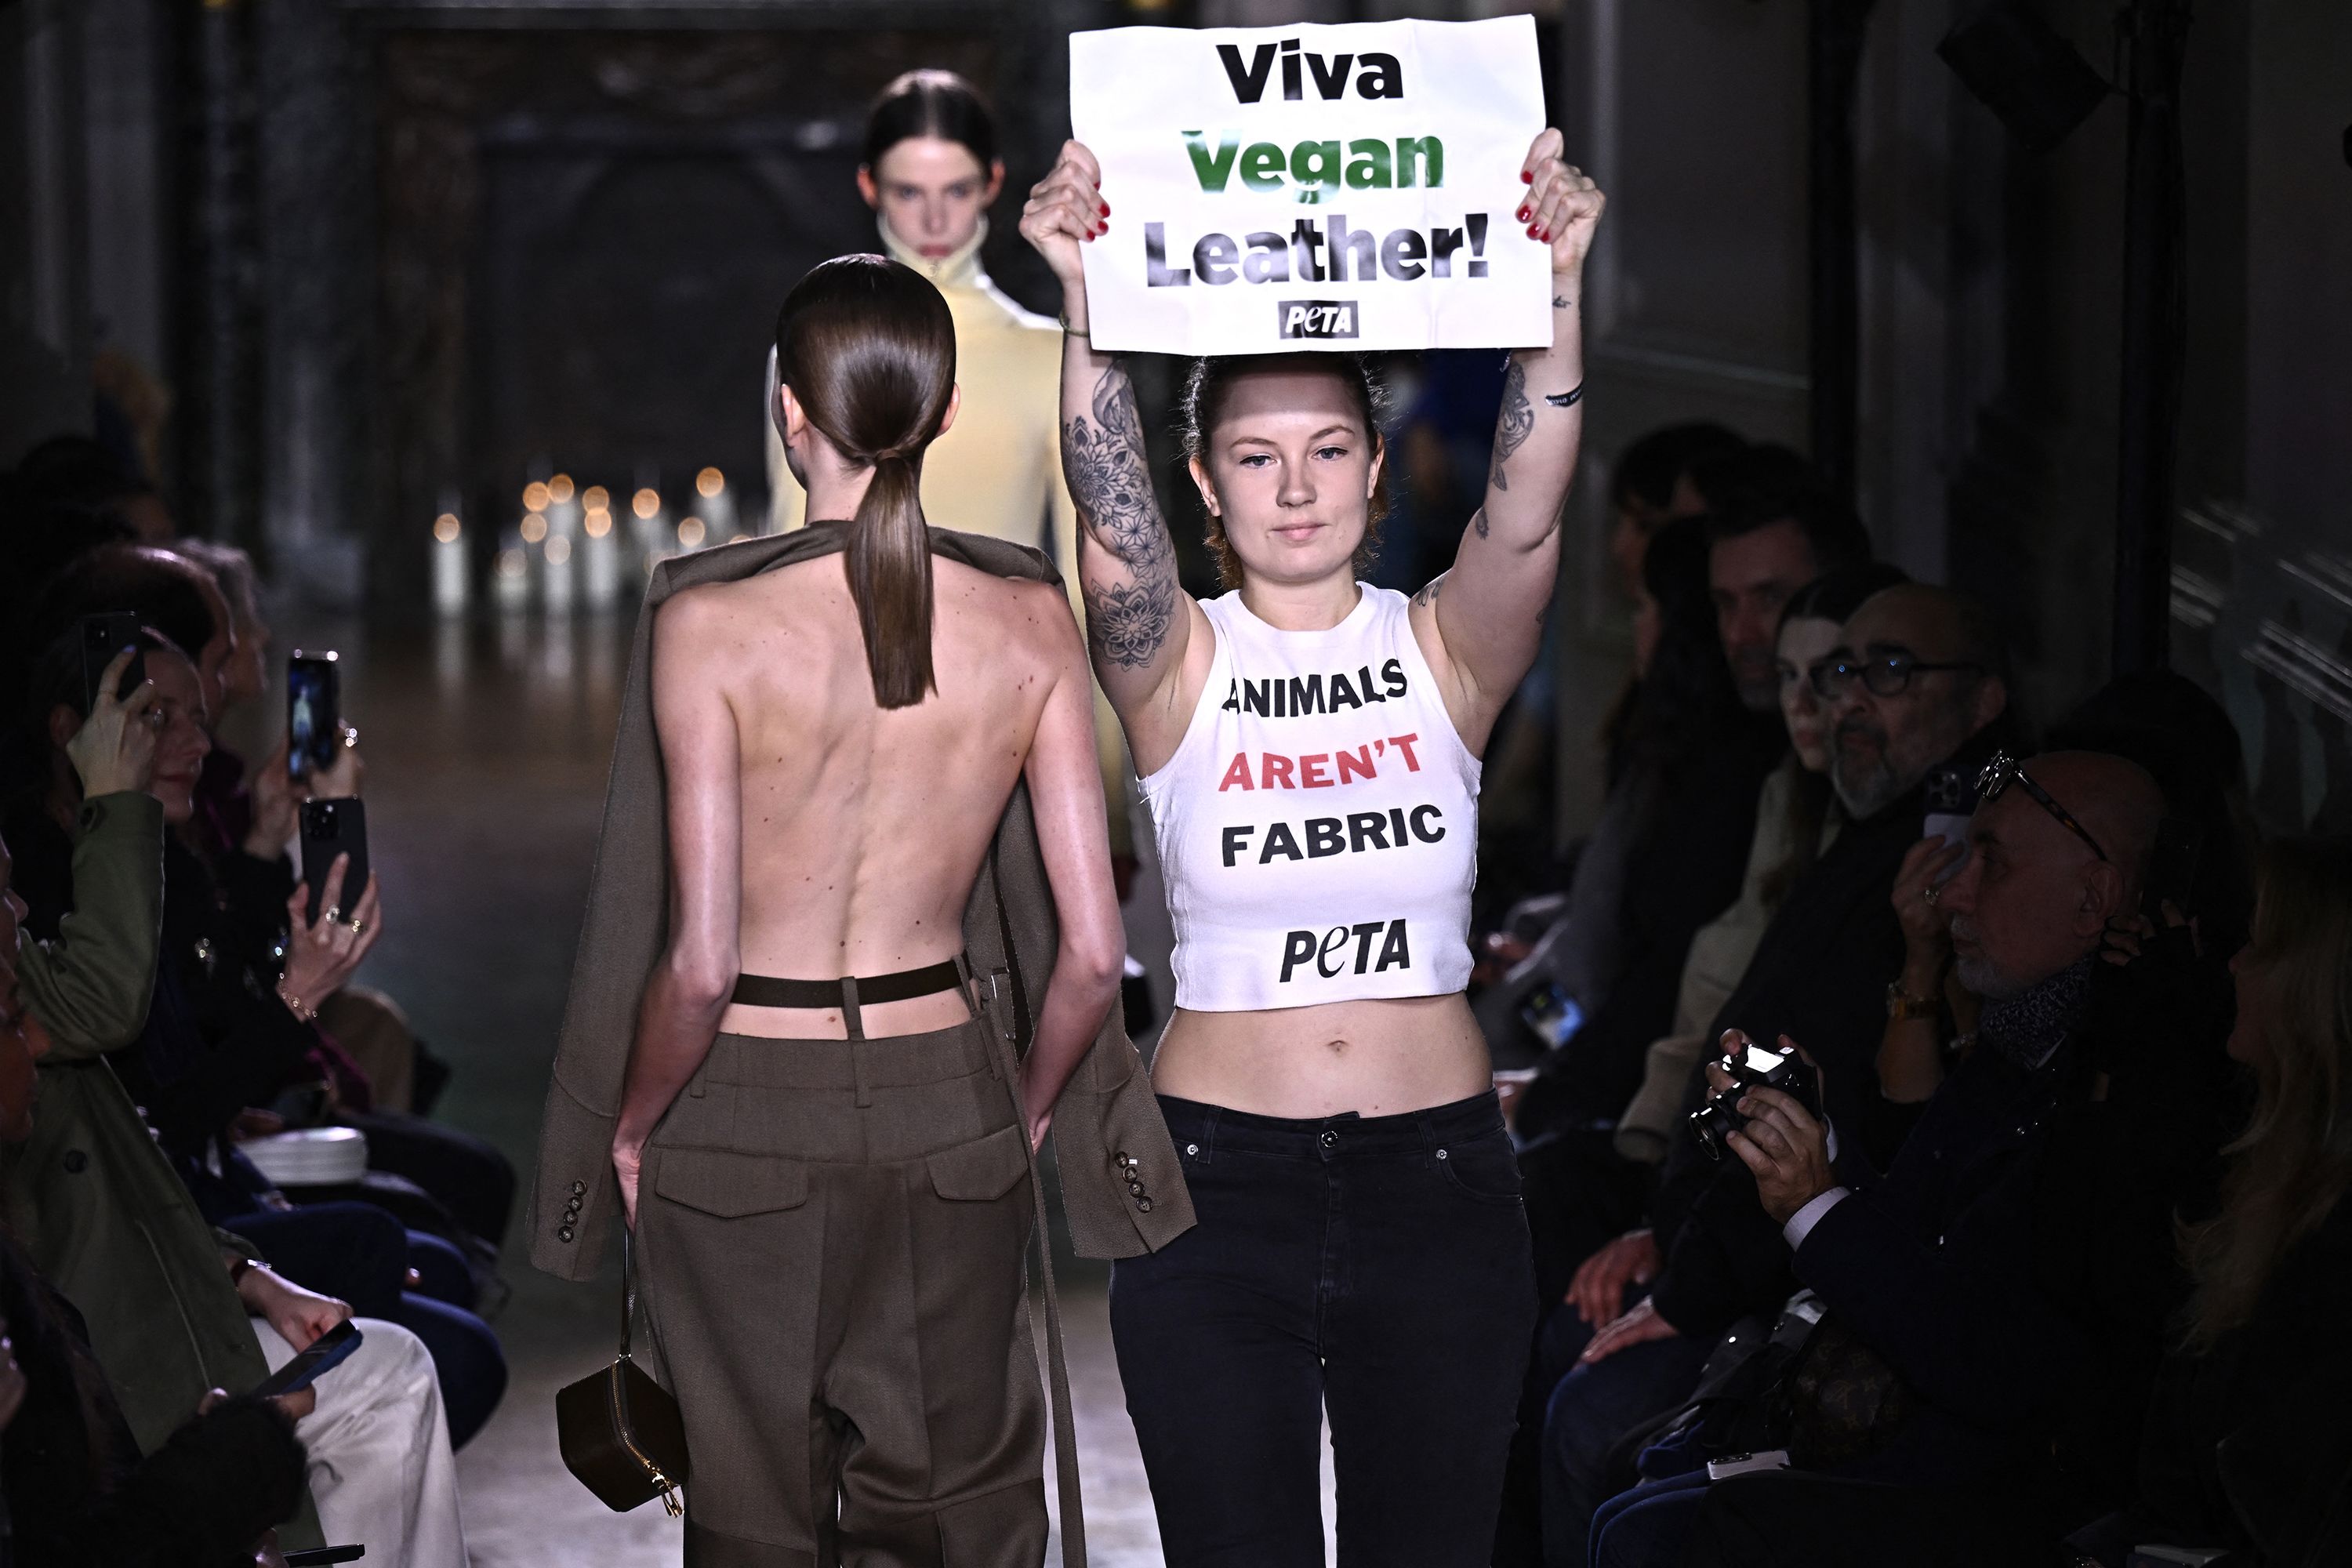 Victoria Beckham Wore a Button Down Utility Dress in Paris